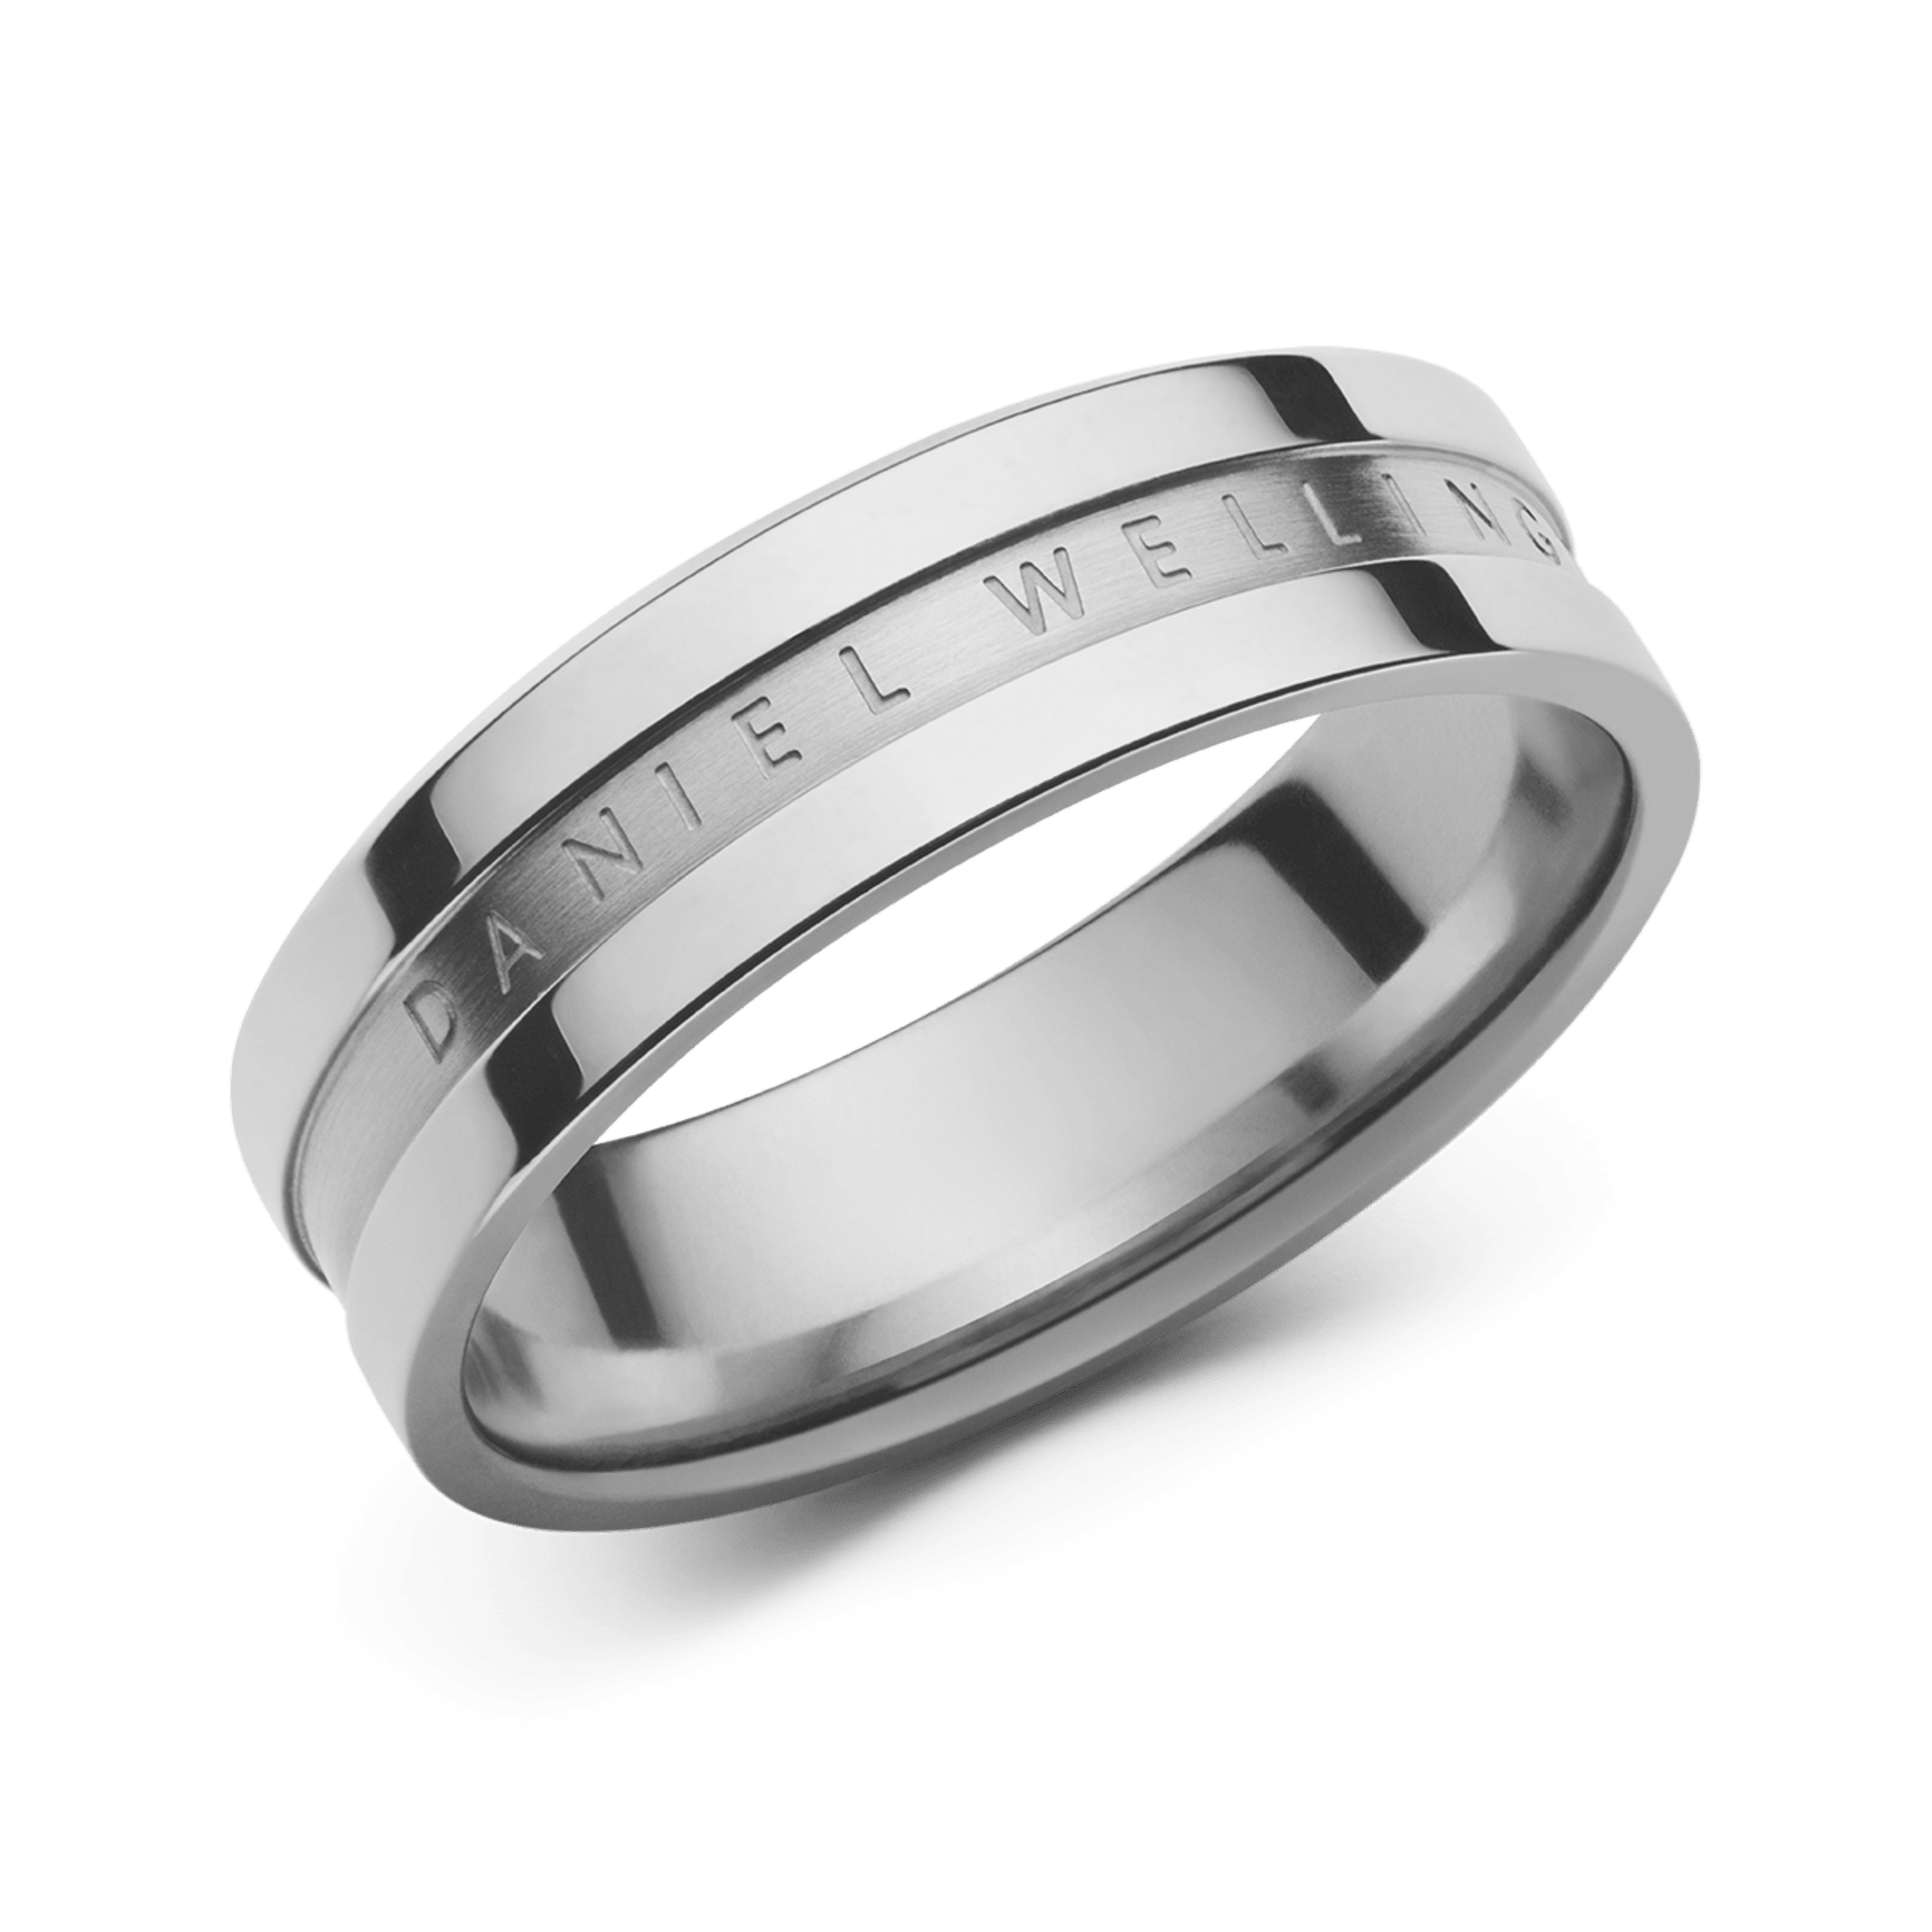 Rings in Silver